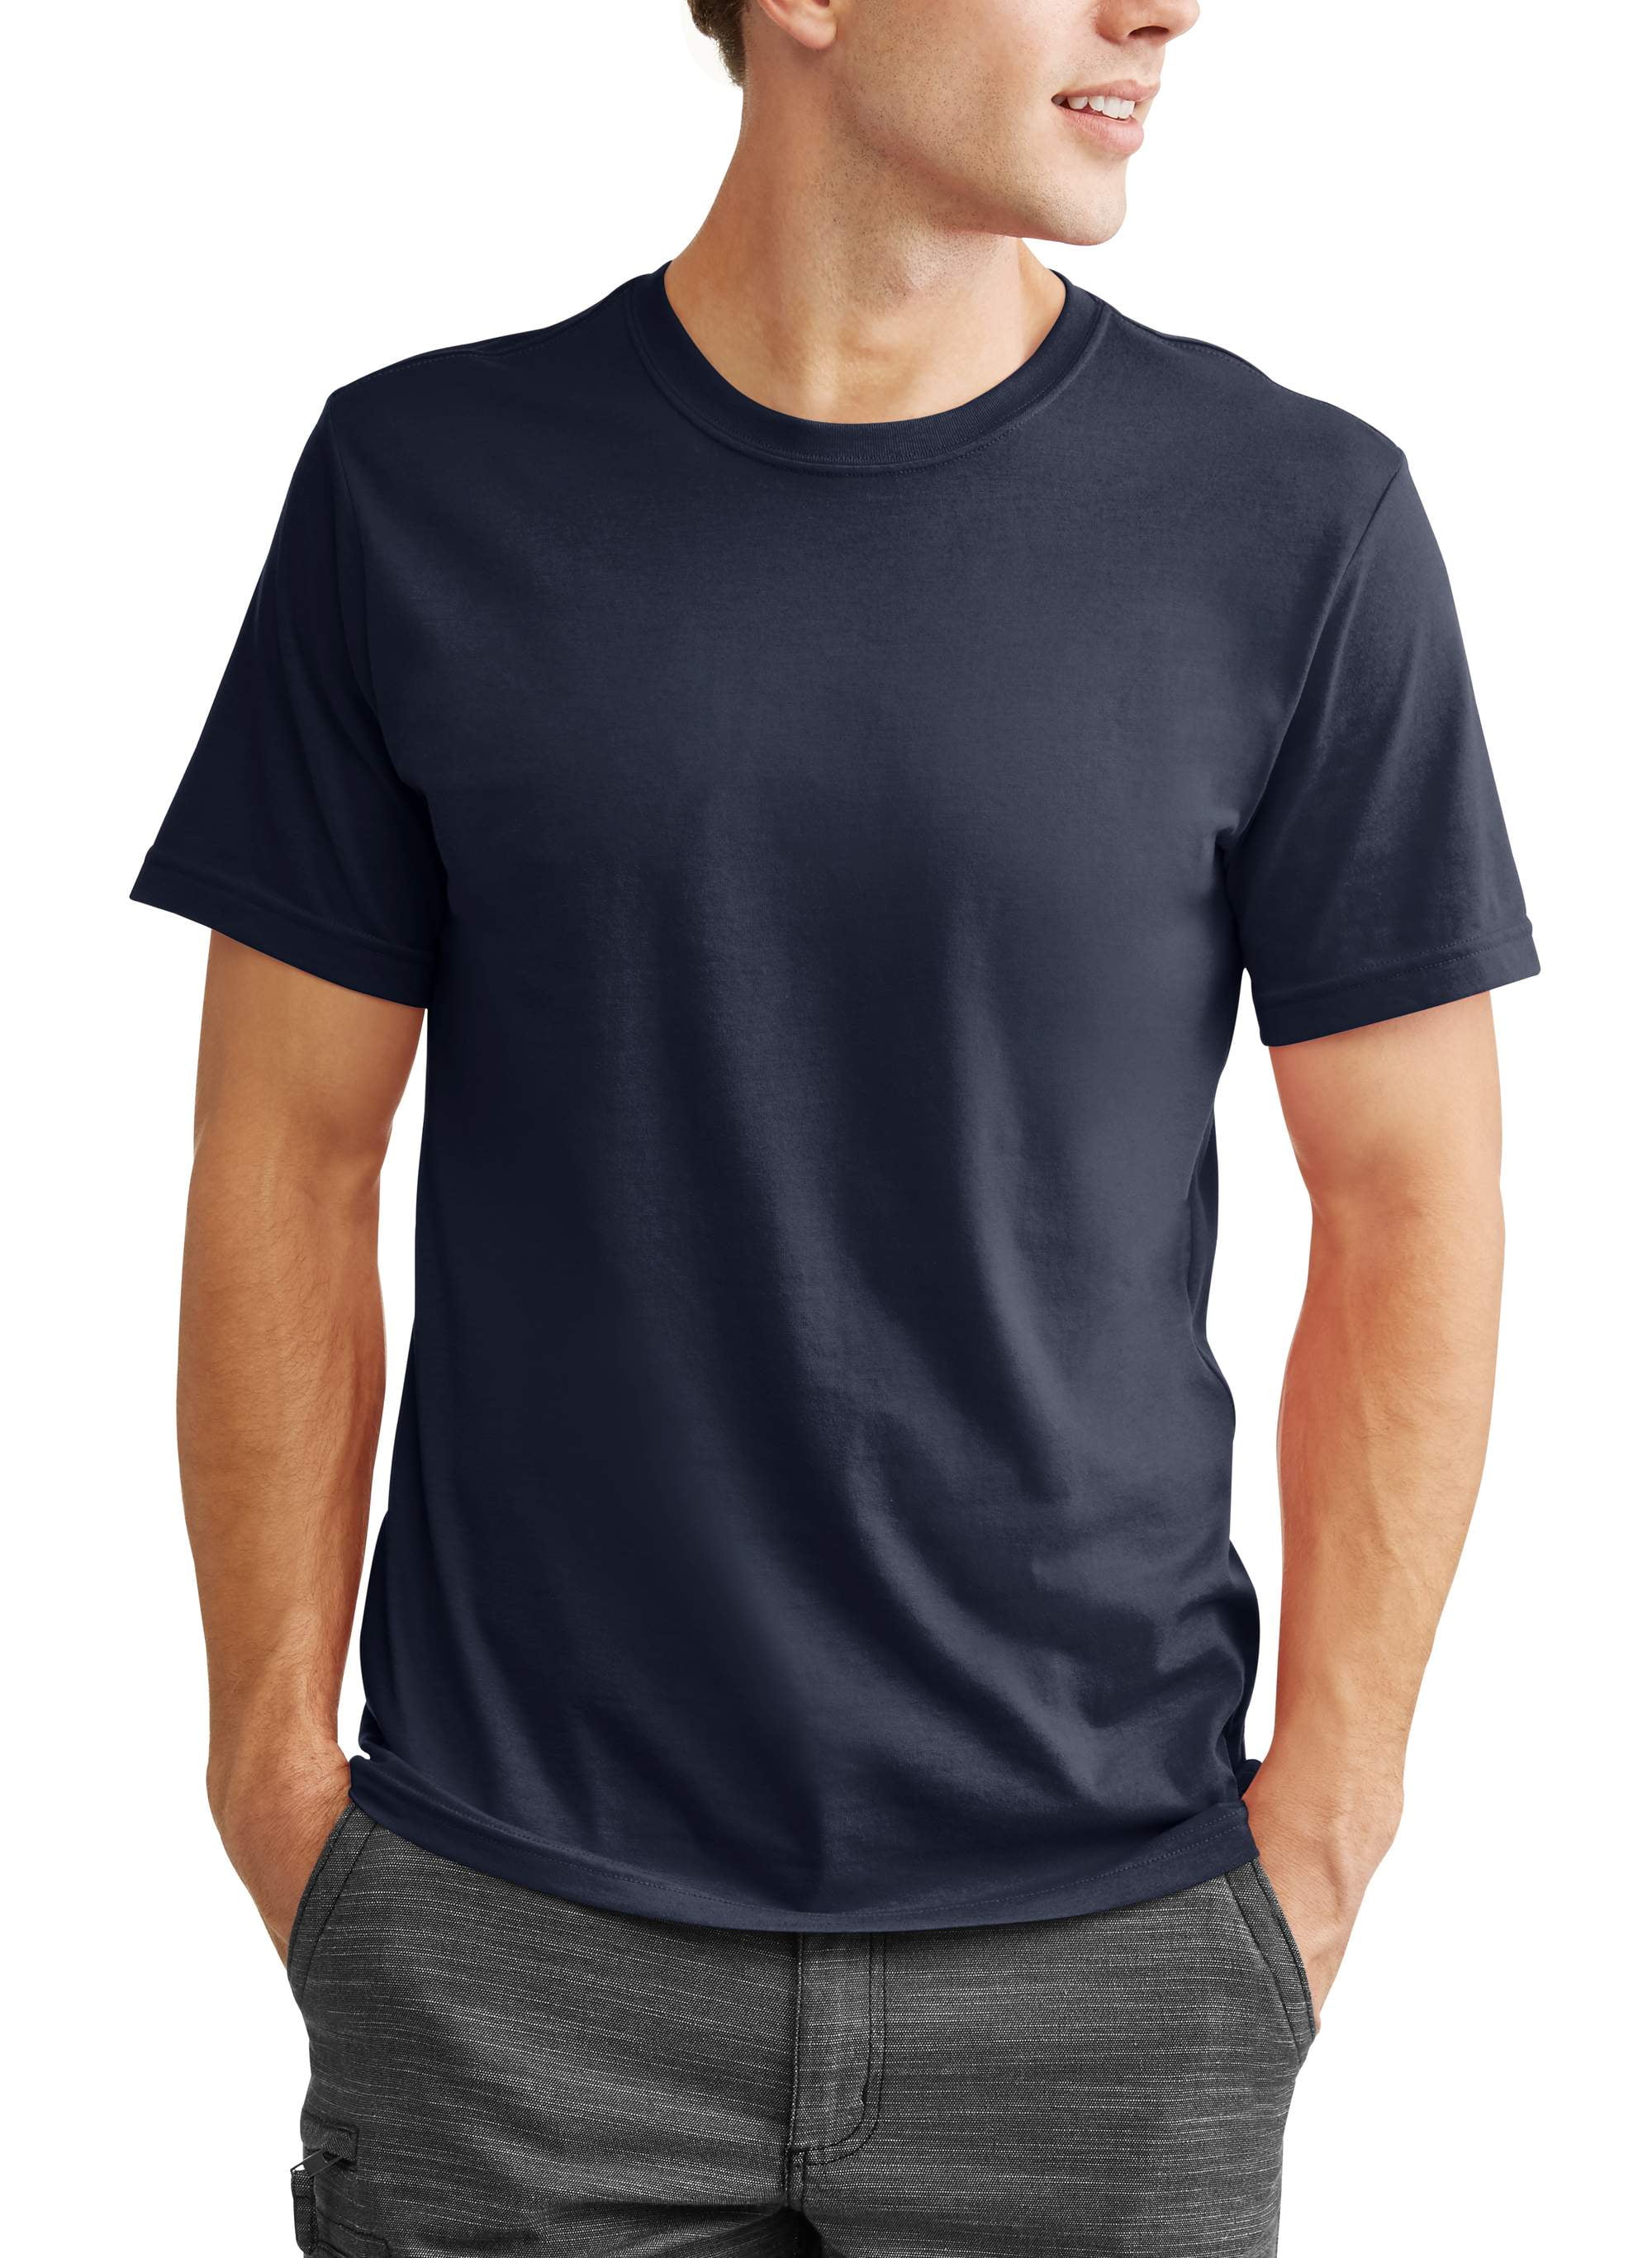 Men’s Short Sleeve Performance Tee, up to size 5XL - Walmart.com